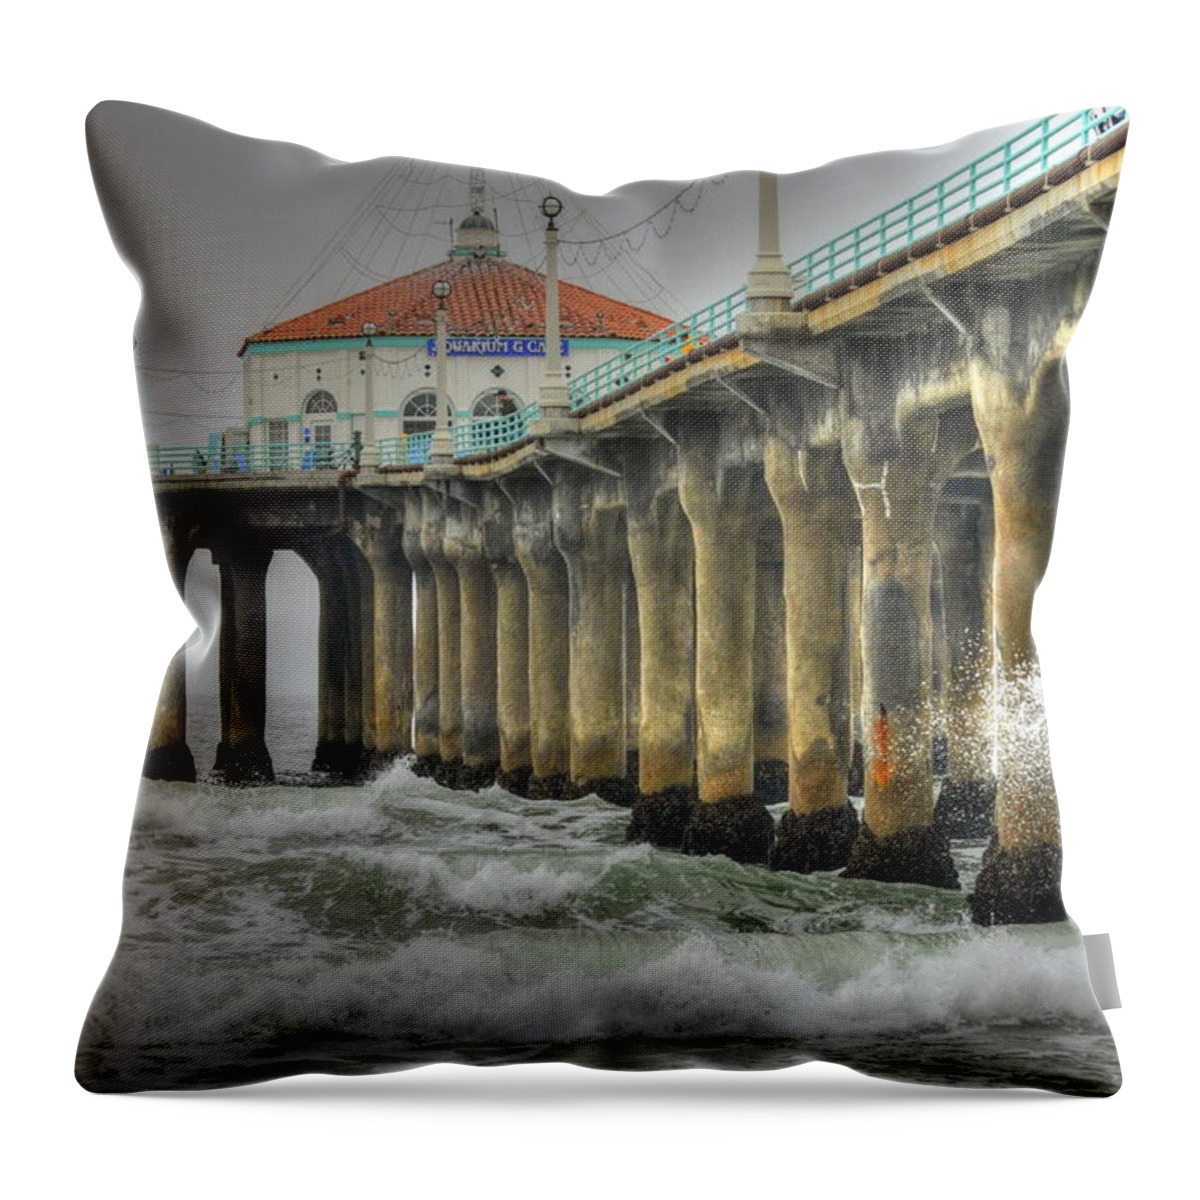 Manhattan Beach Pier Throw Pillow featuring the photograph Overcast Manhattan Beach Pier by Richard Omura